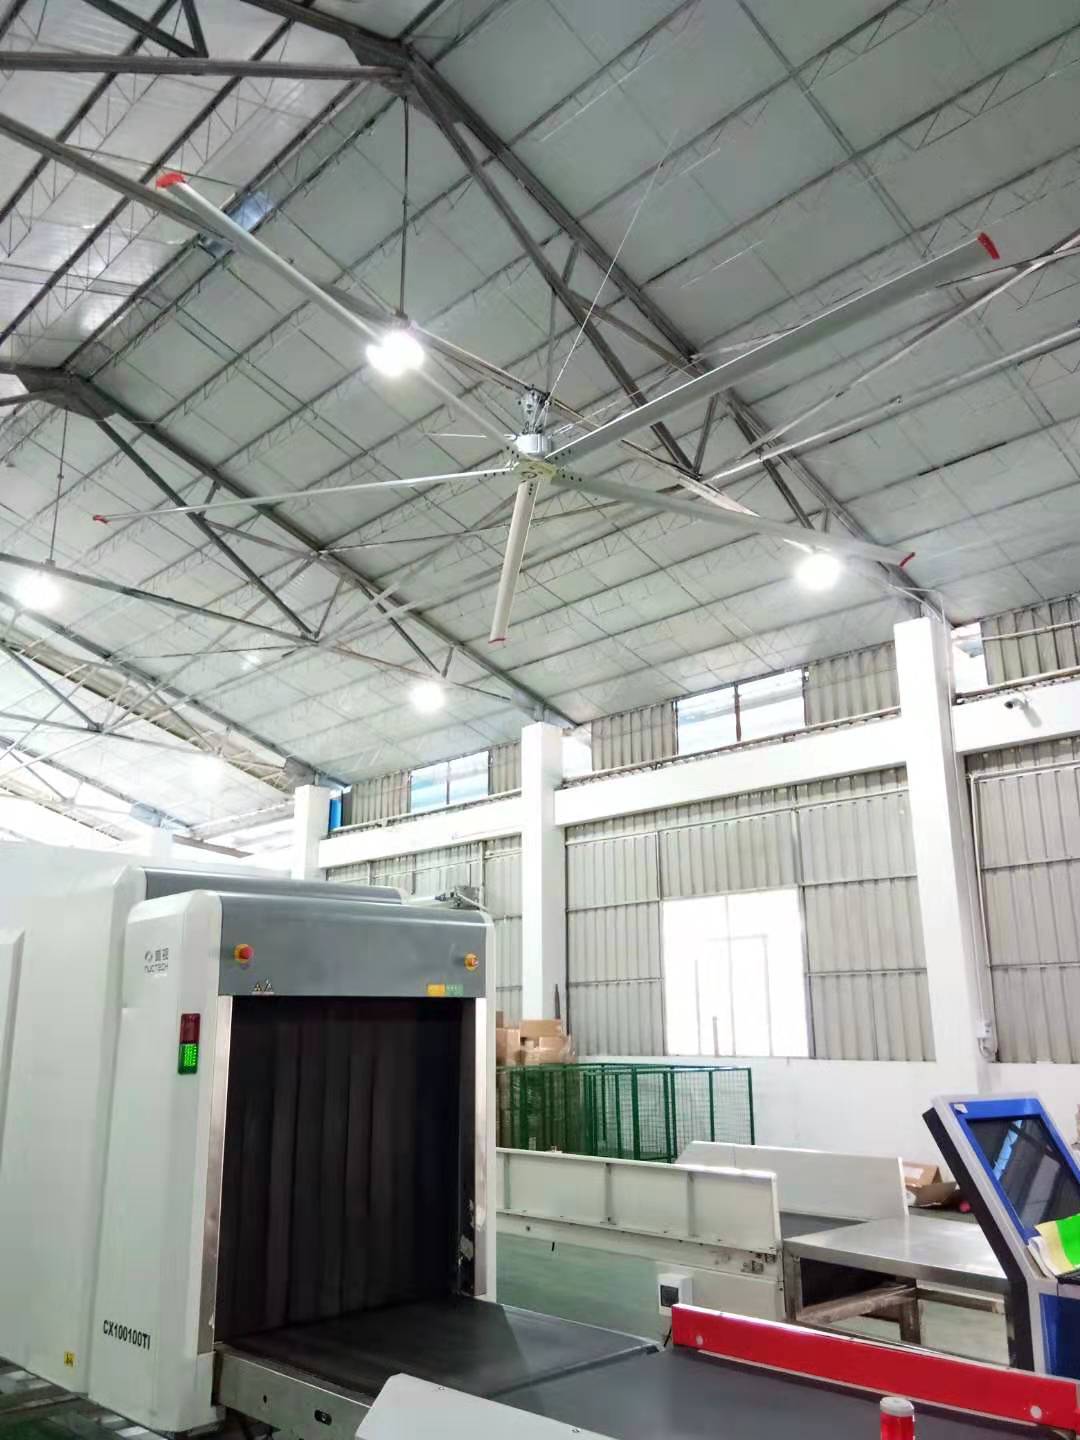 Industrial HVLS ceiling fans